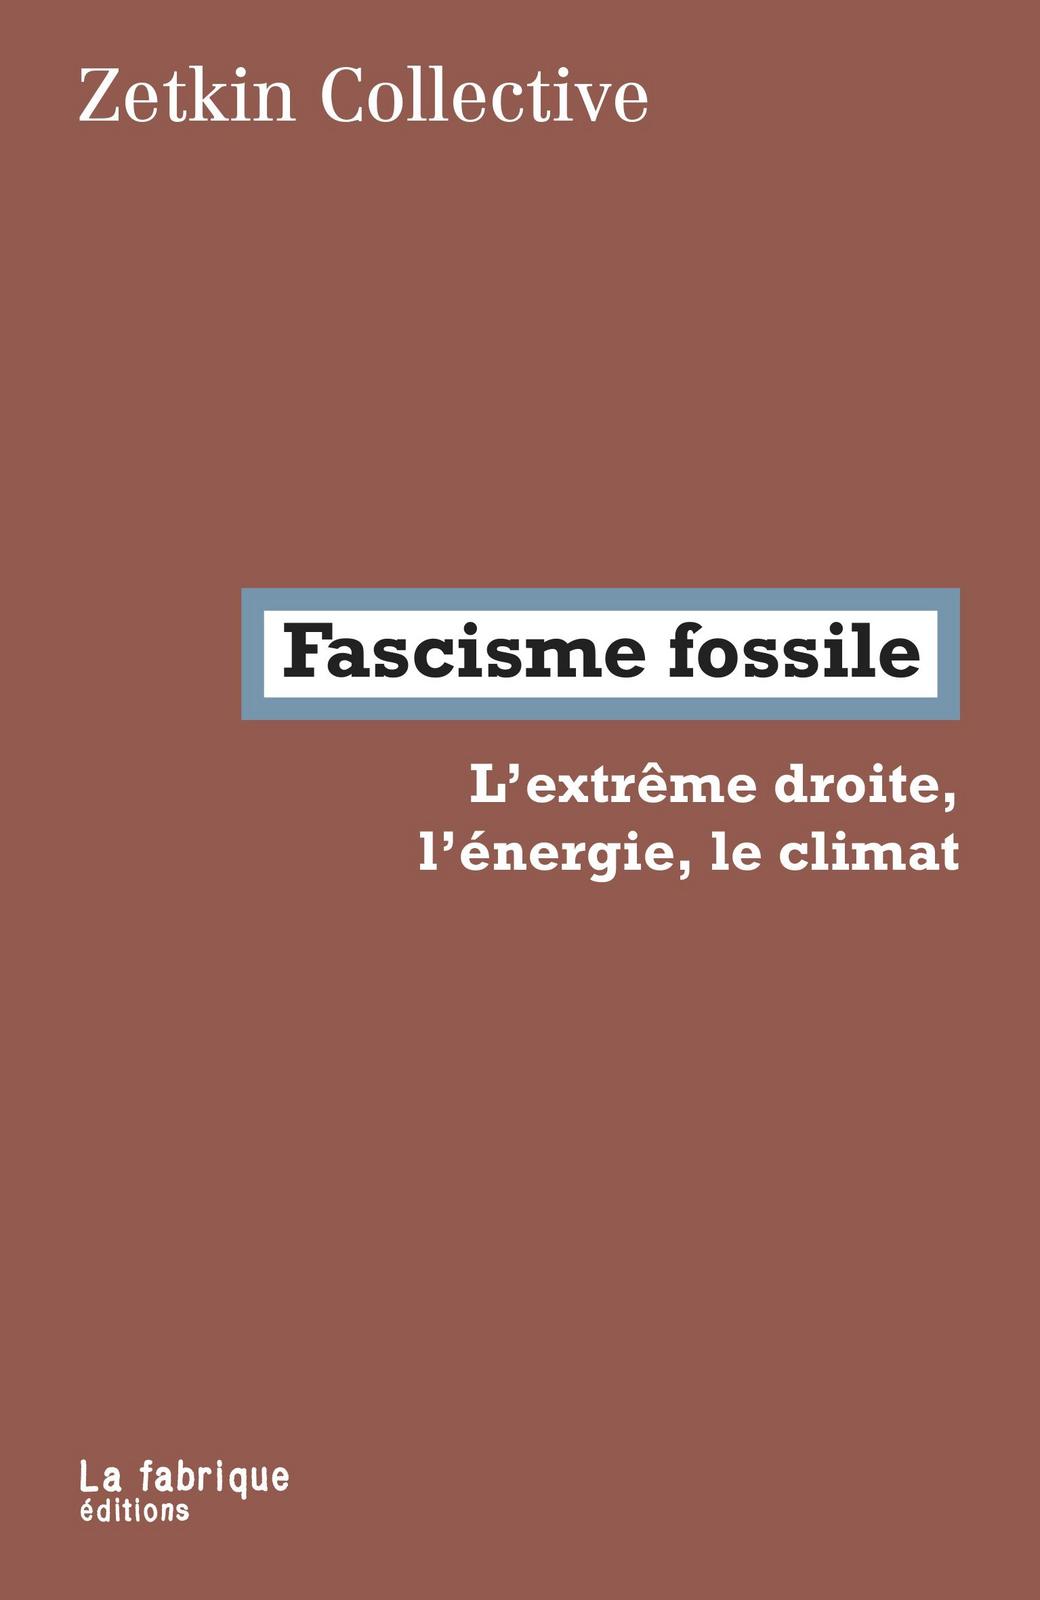 Andreas Malm, Zetkin Collective: Fascisme fossile (Paperback, French language, 2020, La Fabrique)